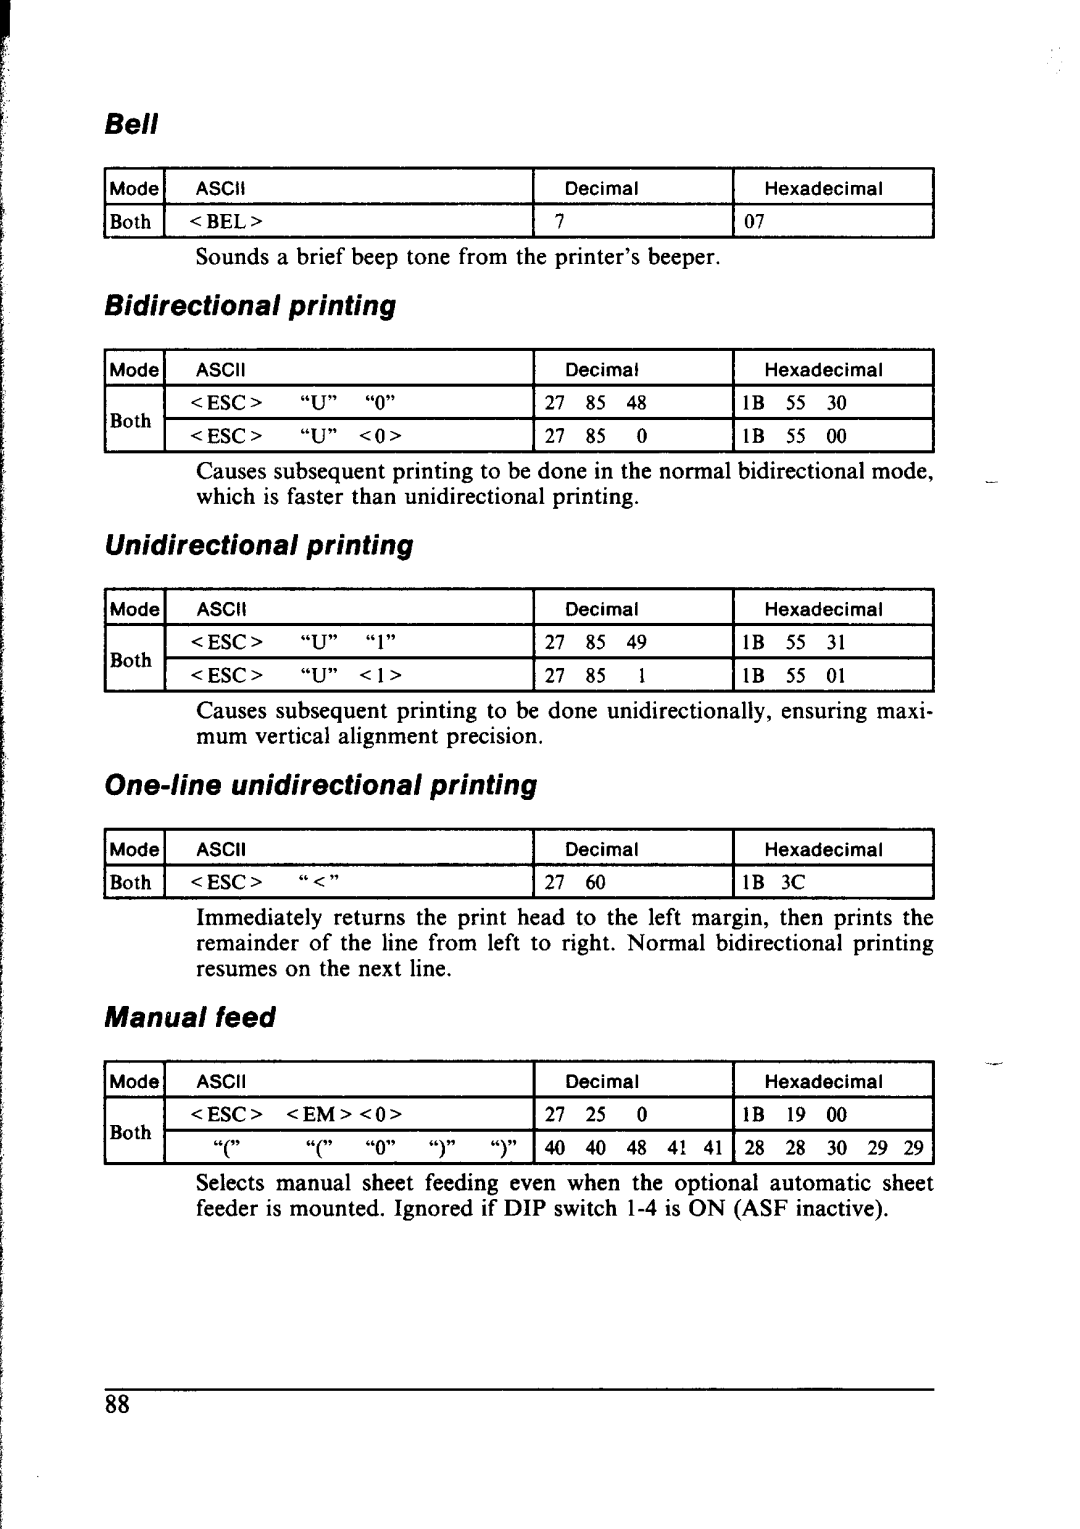 Star Micronics NX-1000 Bidirectional printing, Unidirectional printing, One-line unidirectional printing, Manual feed 